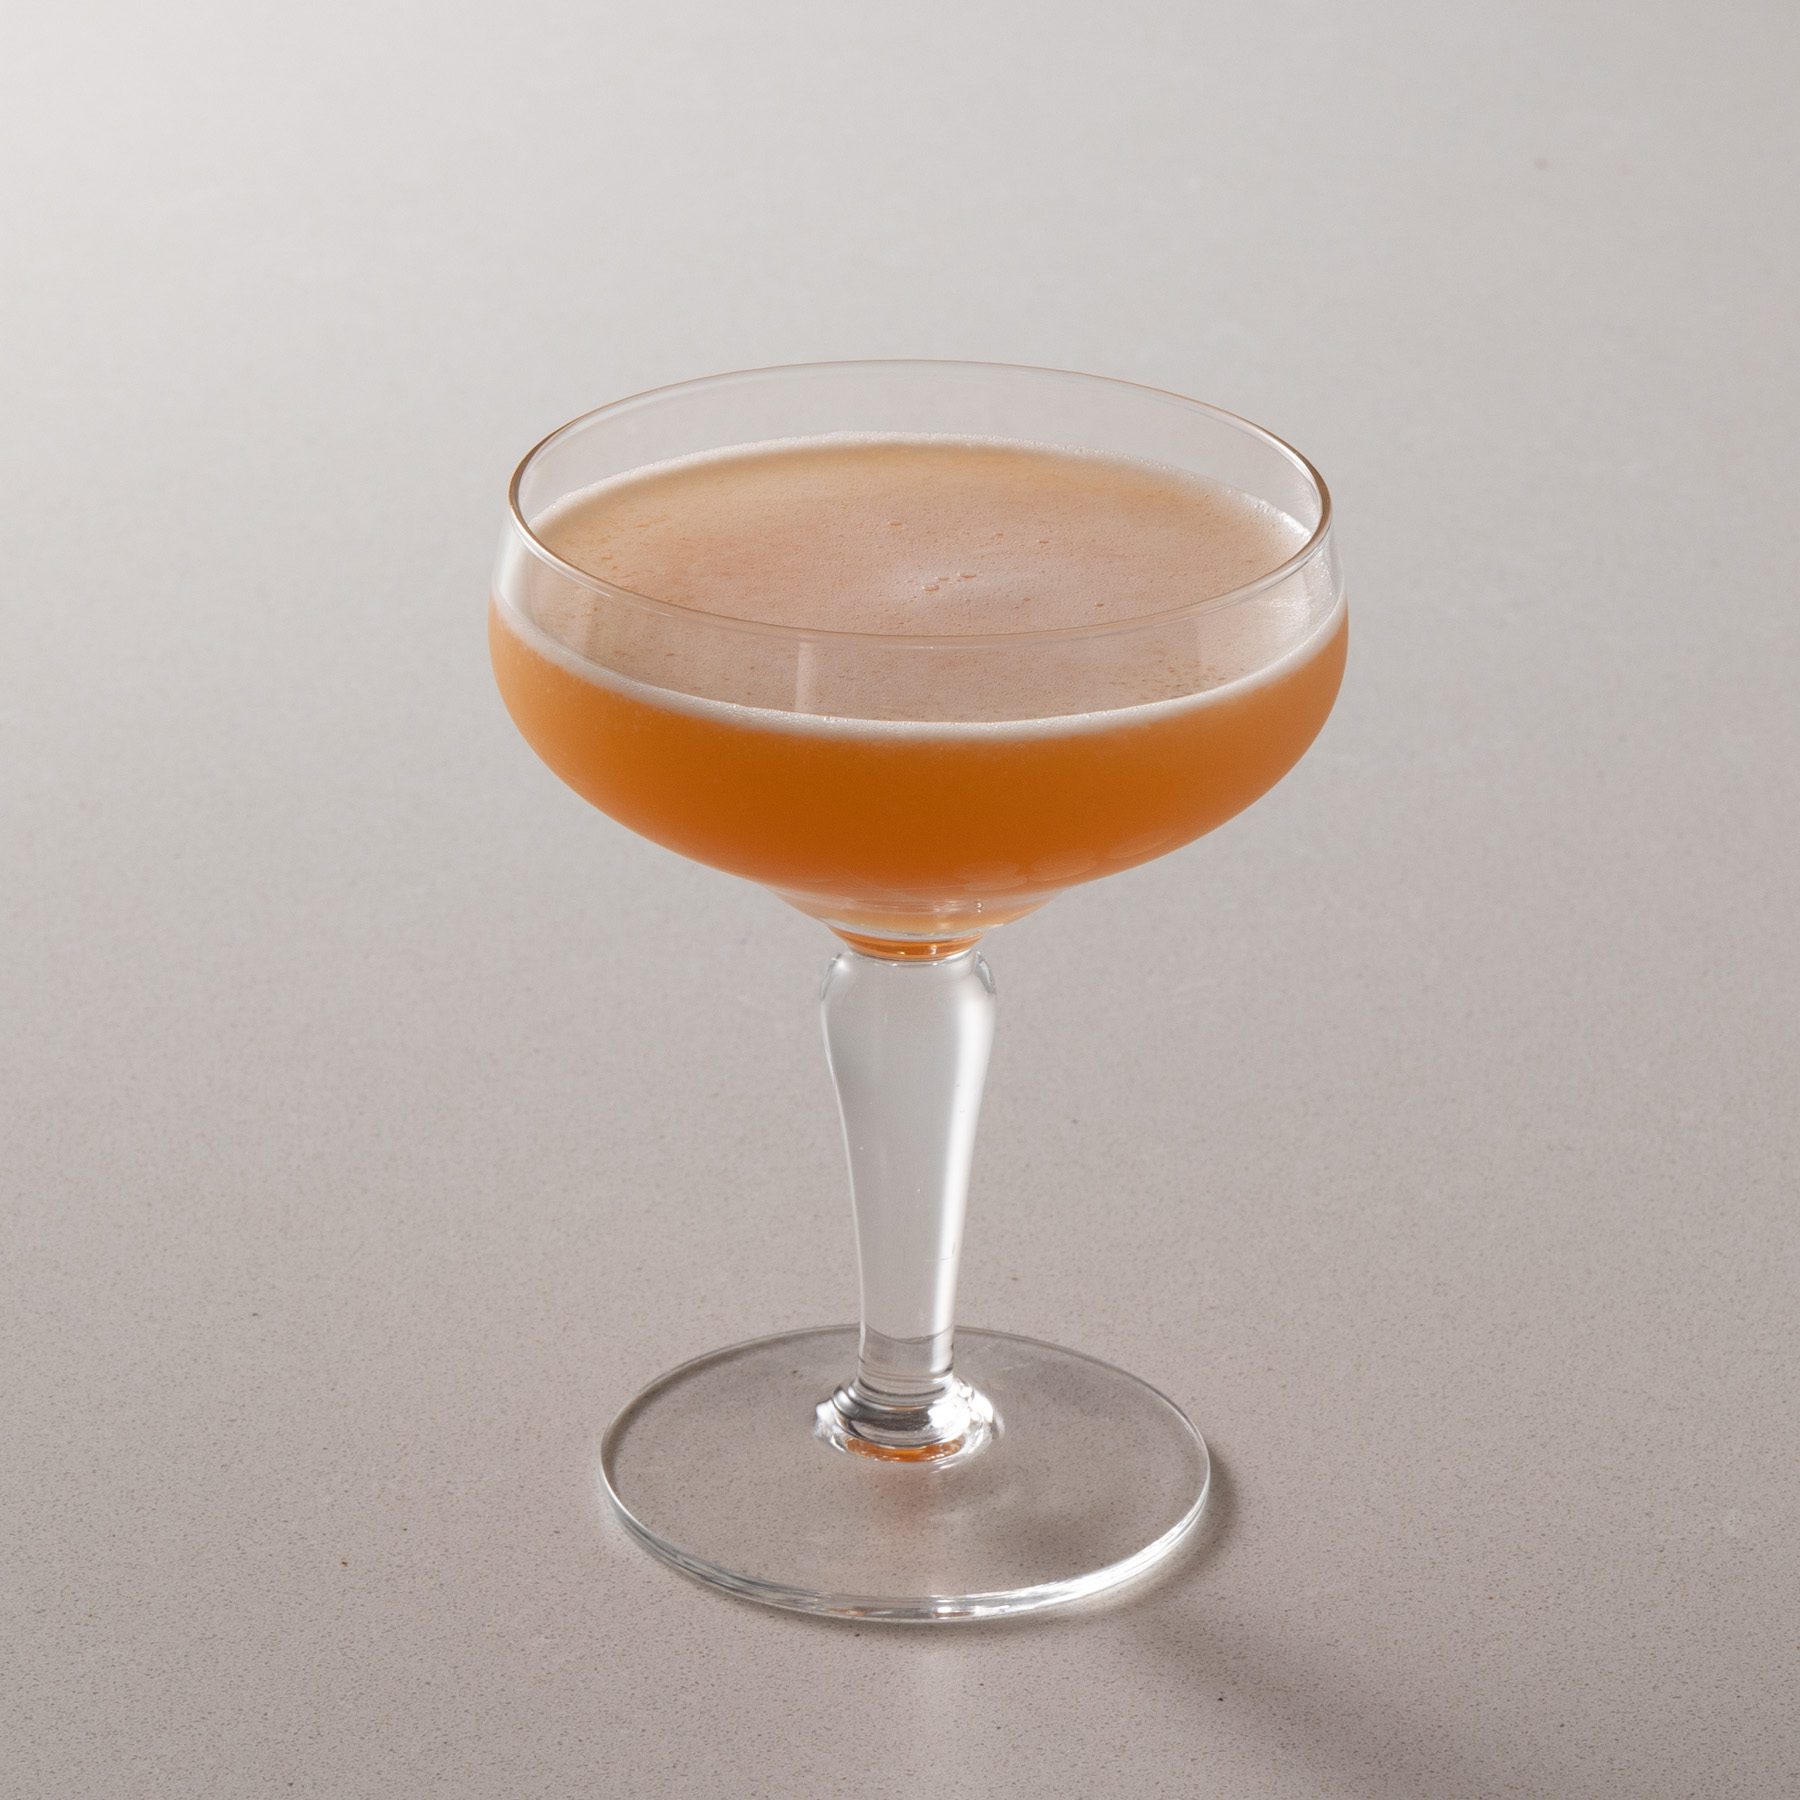 Monkey Gland cocktail